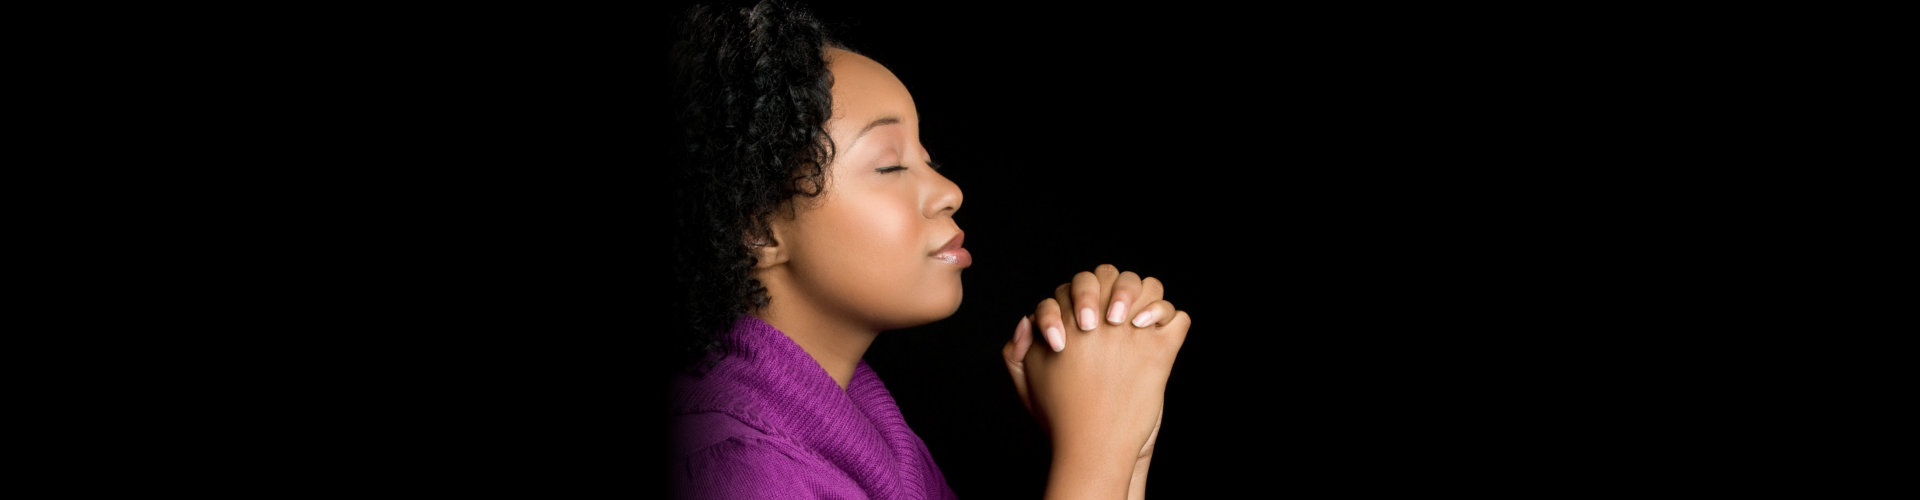 Pretty religious black woman praying